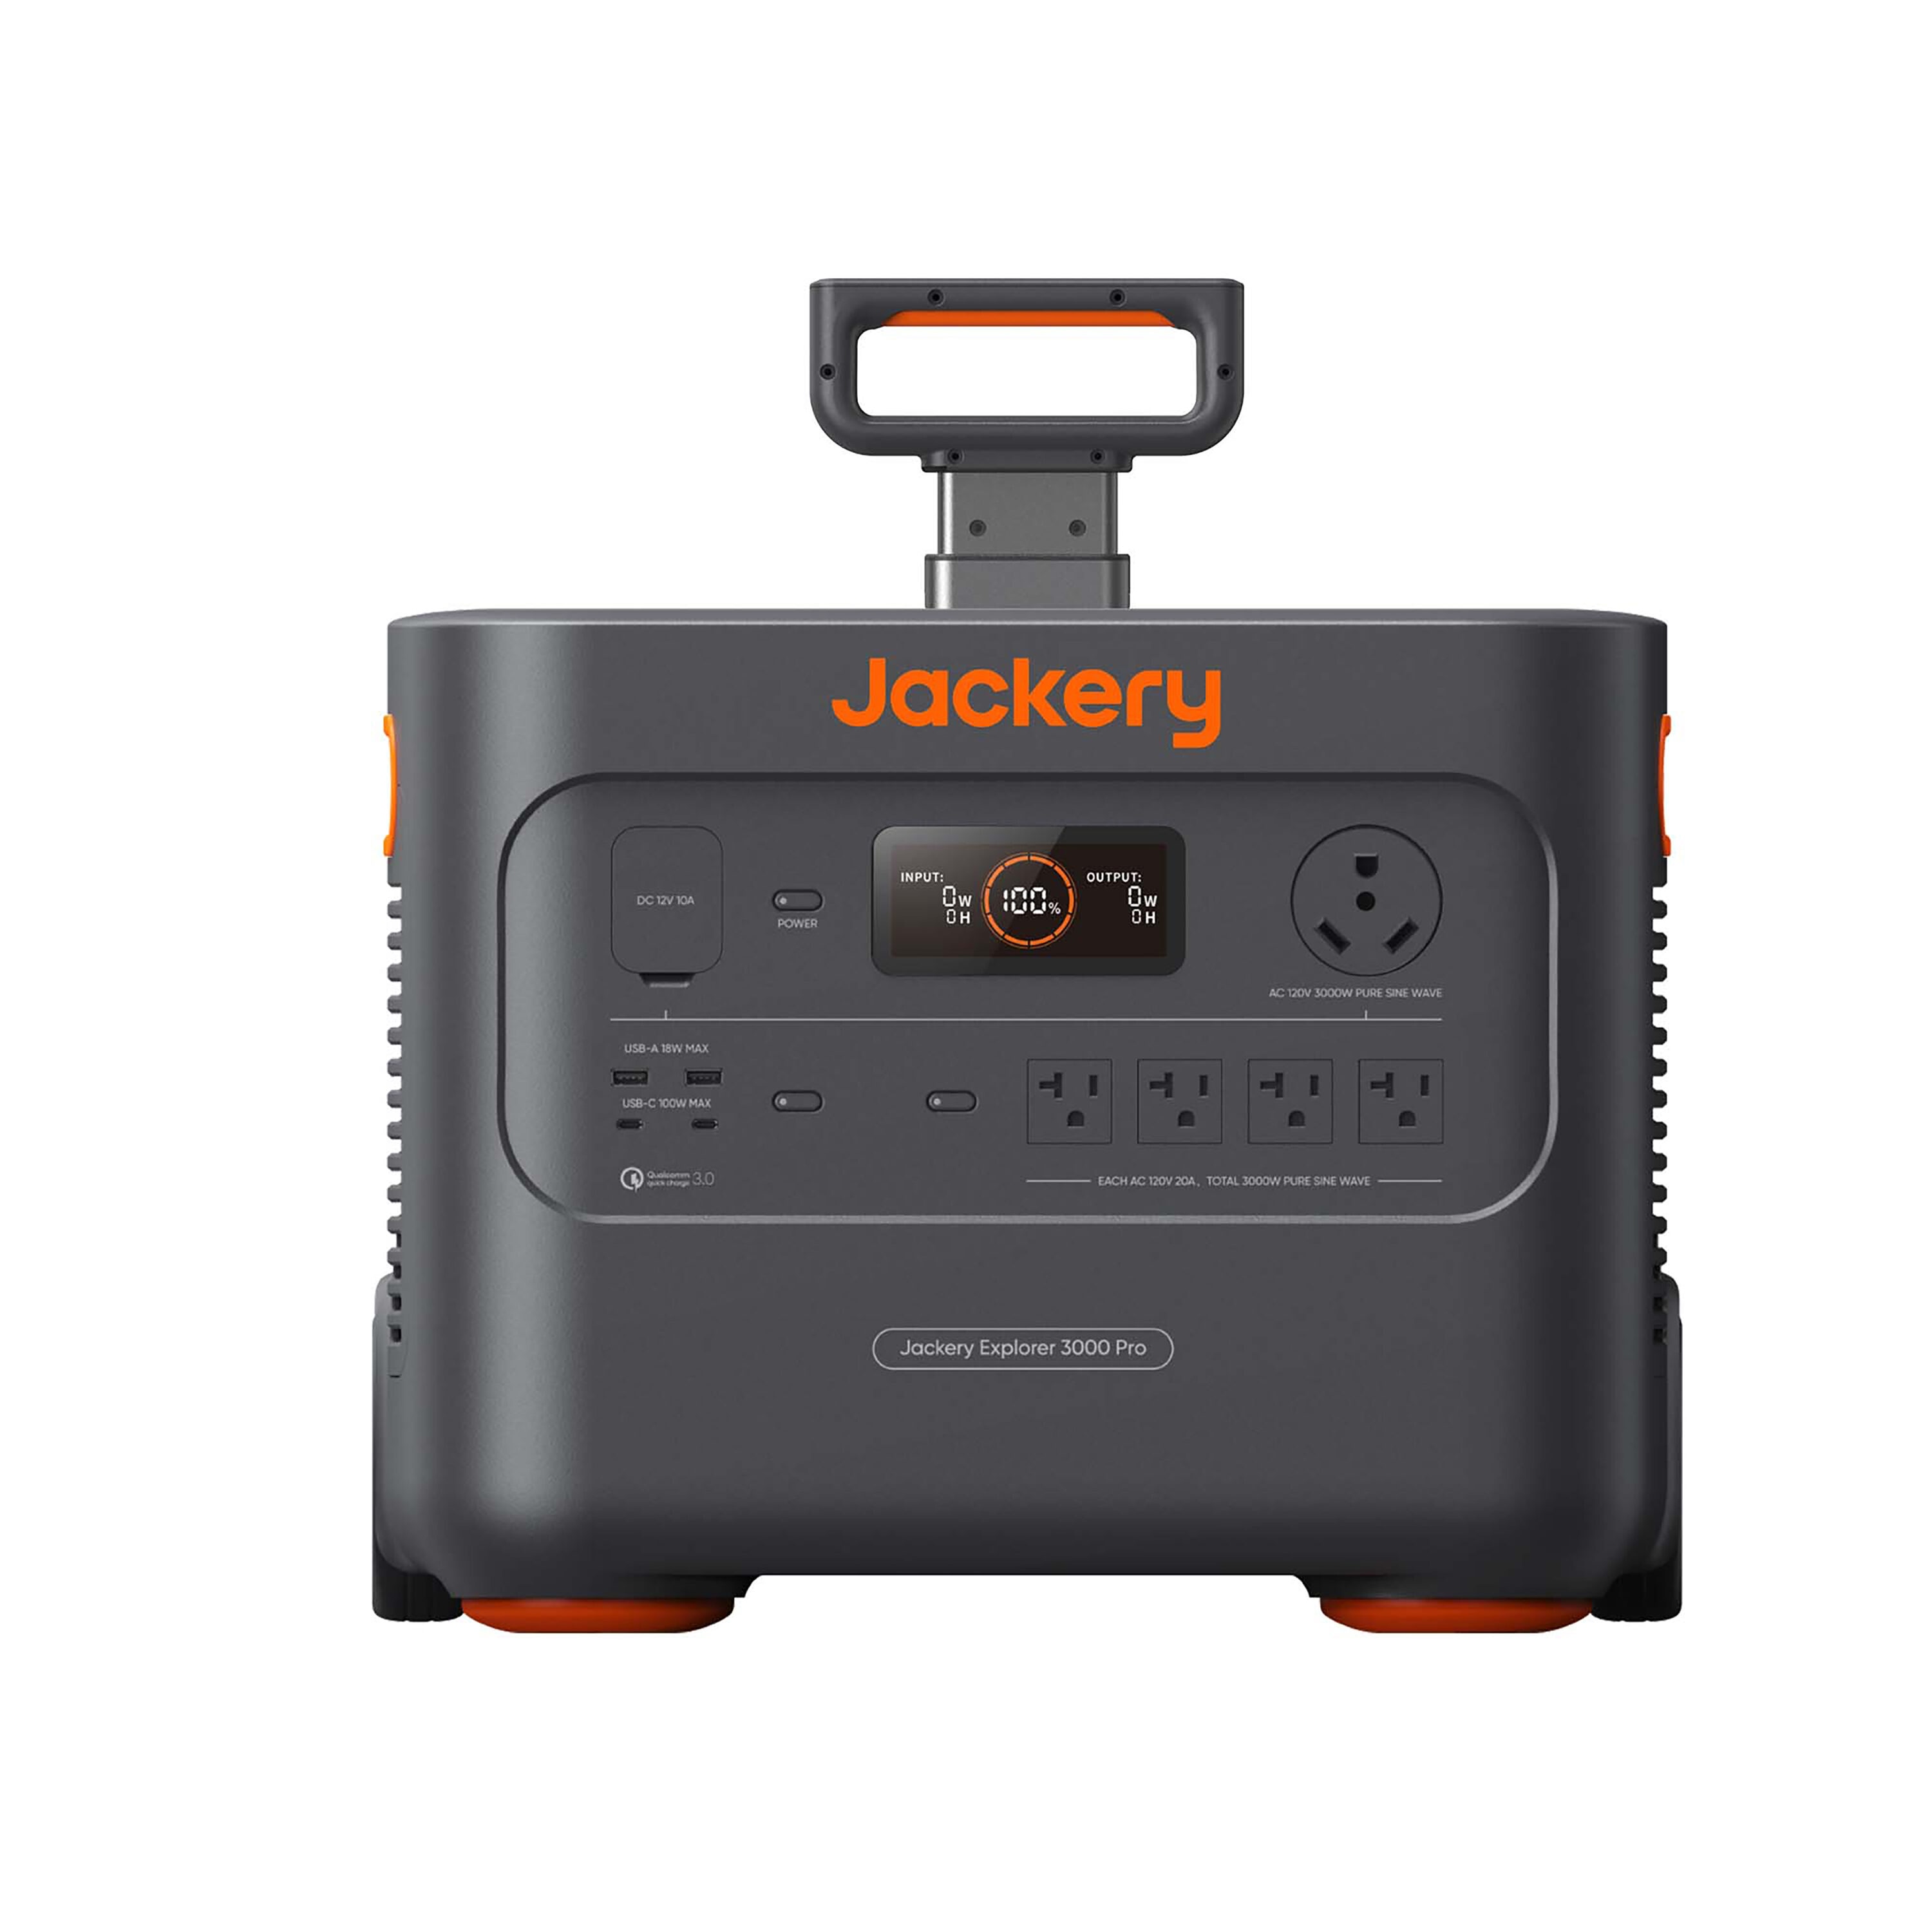 Jackery Explorer Plus Solar Generator Review – 300, 1000, 2000